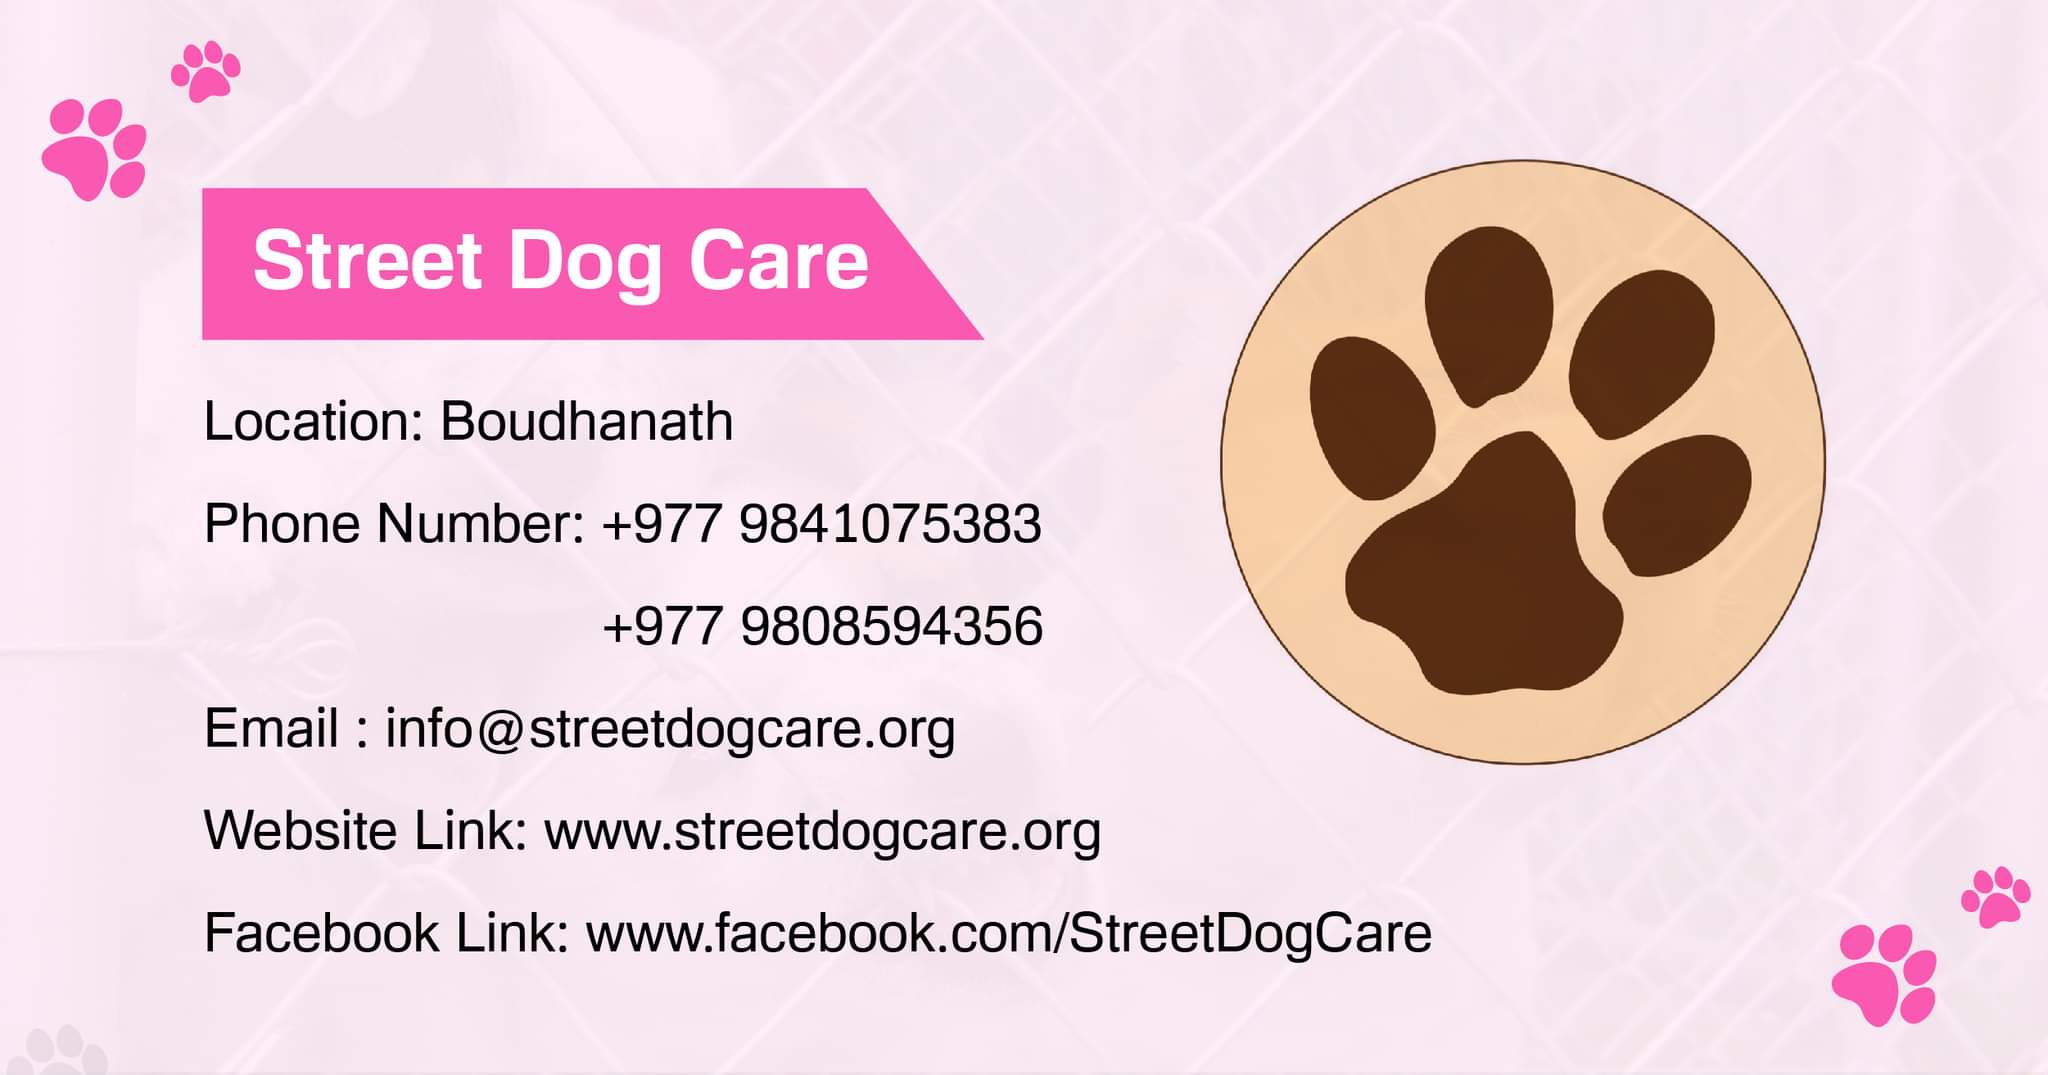 Street Dog Care Dog adoption